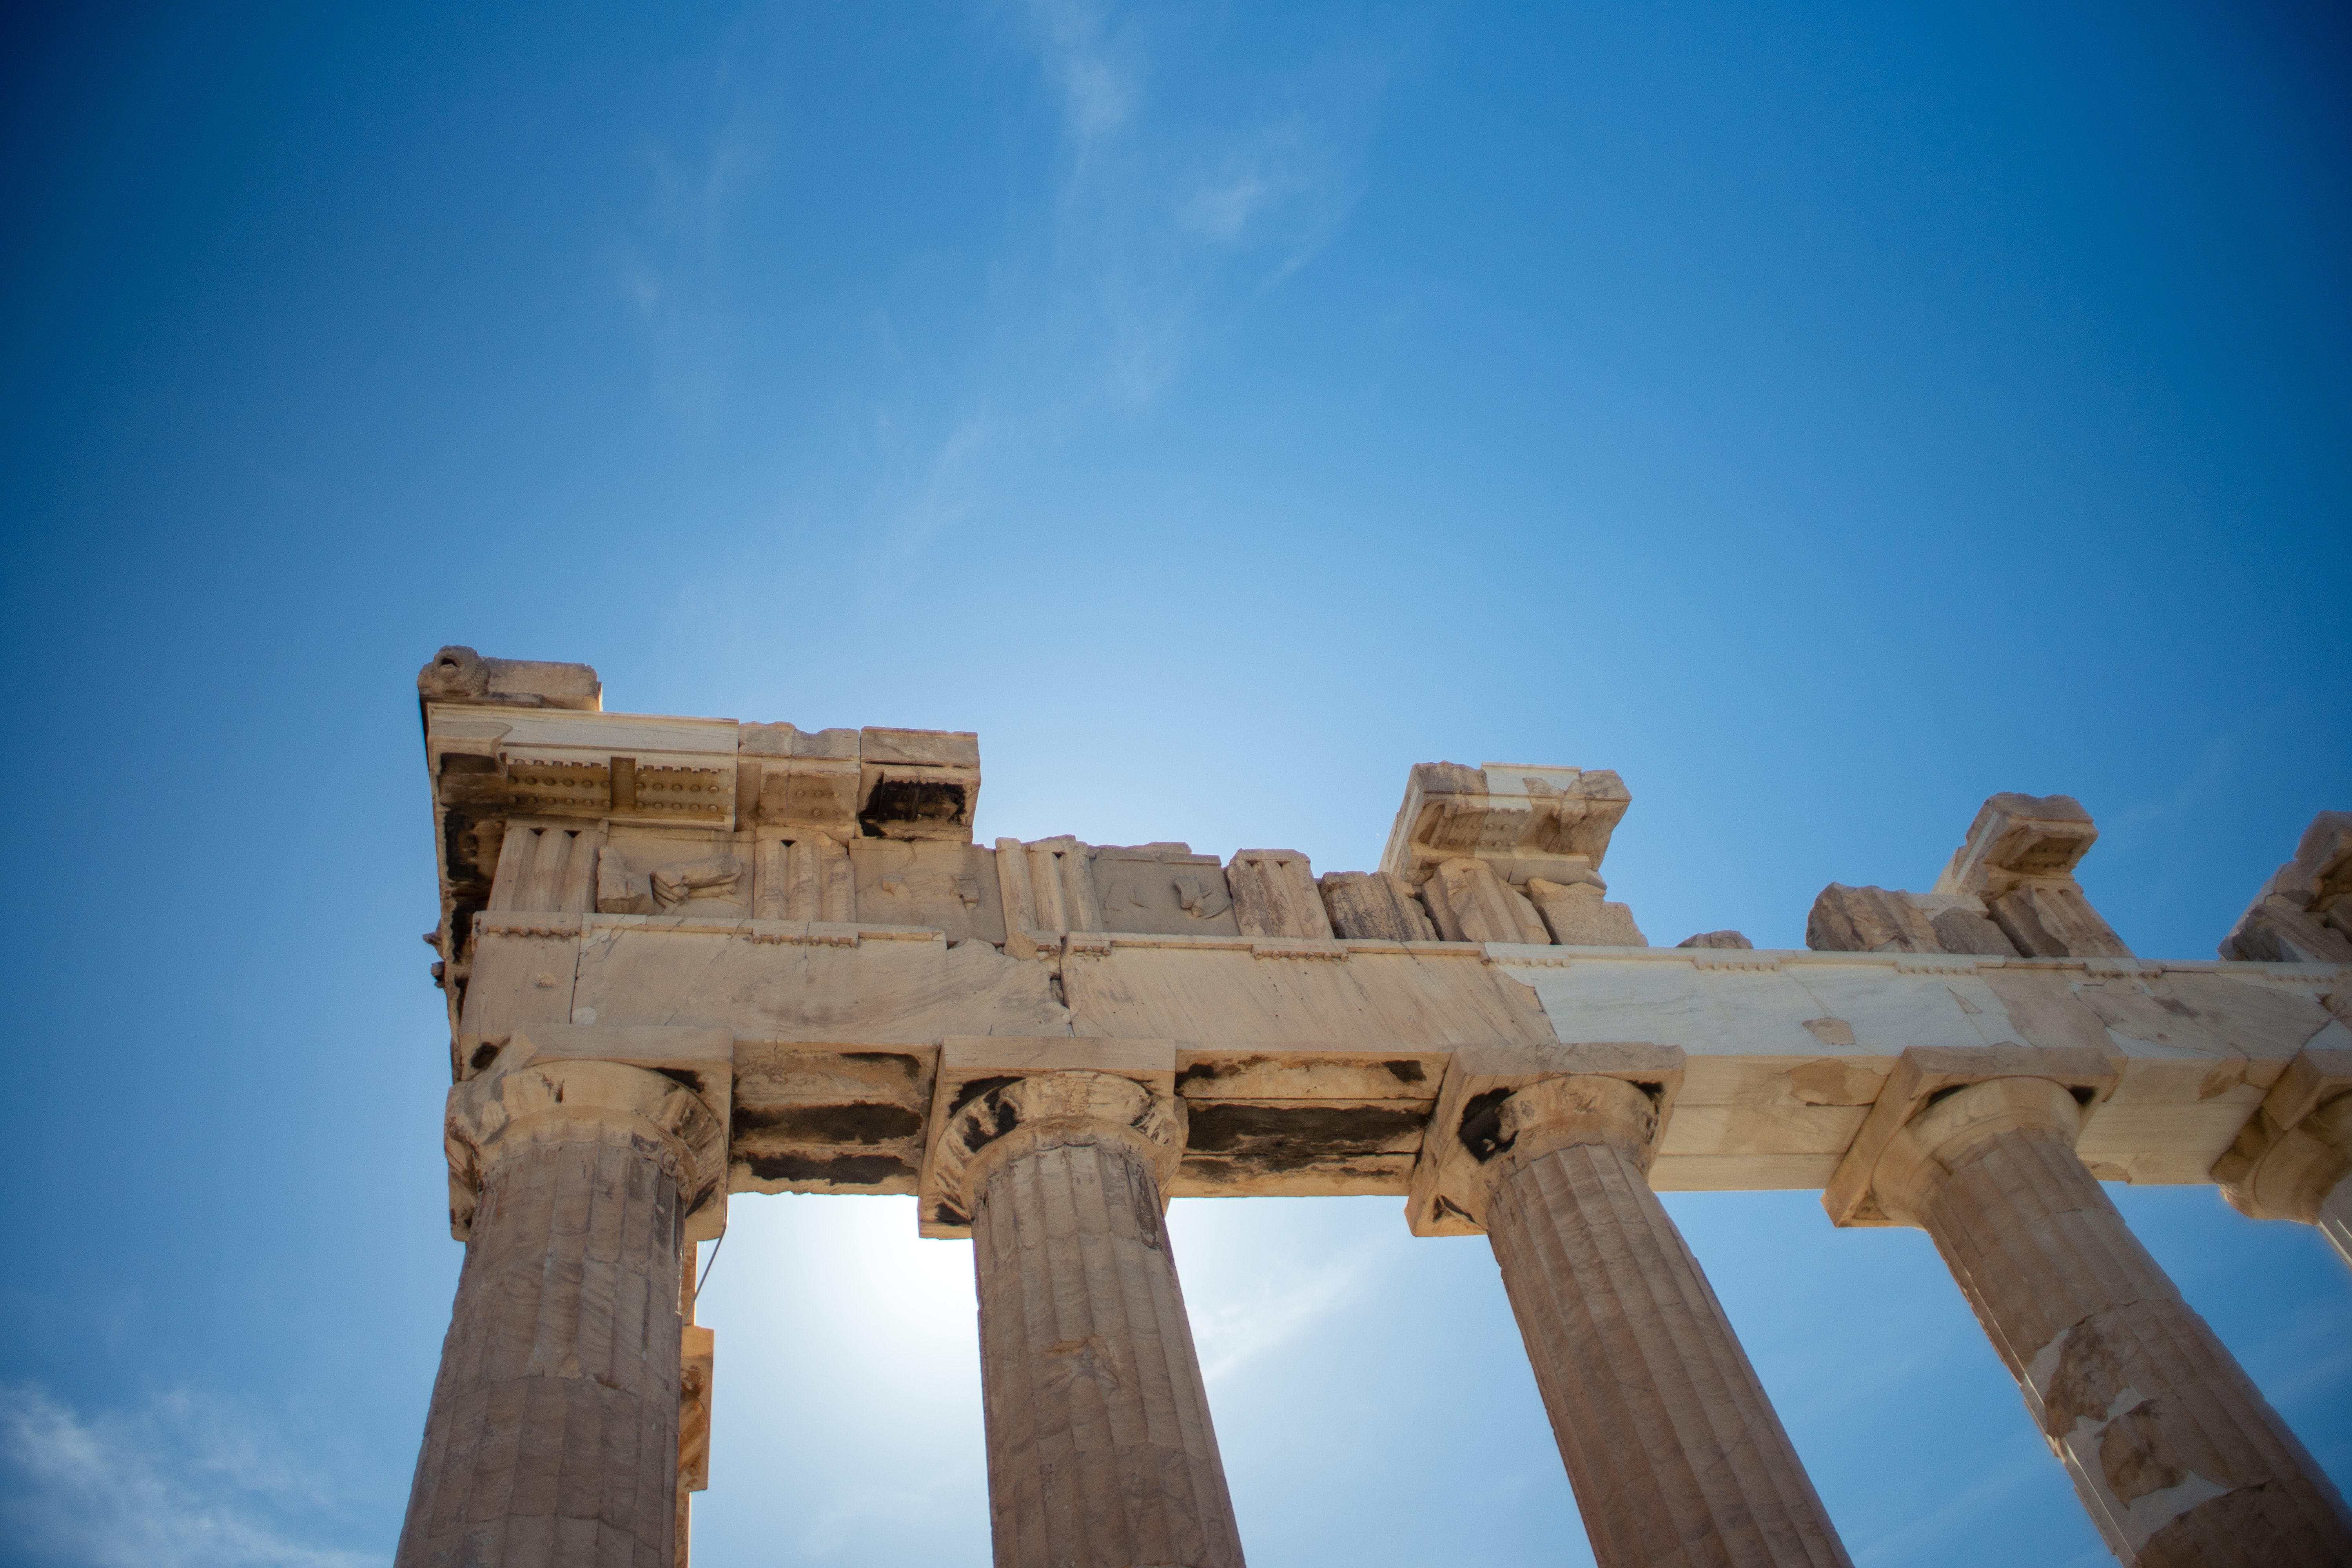 Pathernon, in the Acropolis of Athens, Greece